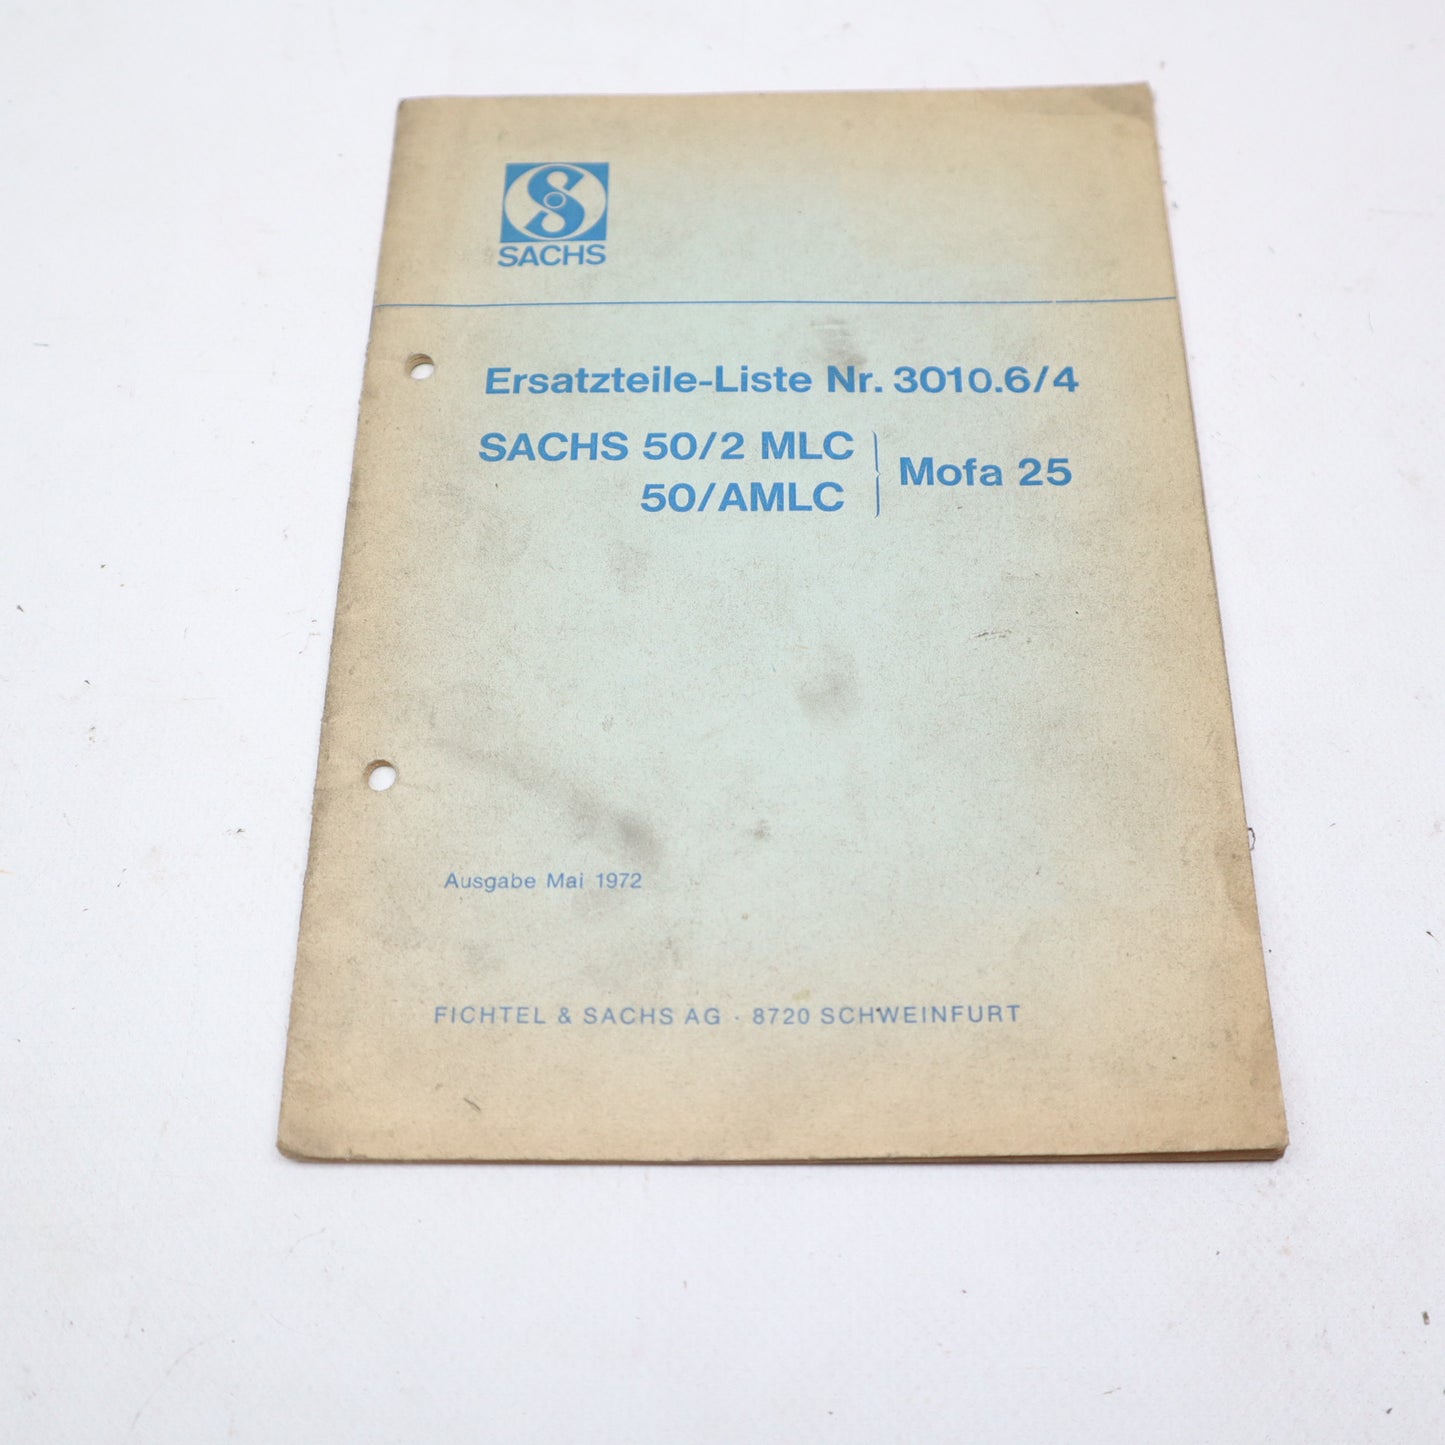 Ersatzteile-Liste Nr. 3010.6/4 Sachs 50/2 MLC, 50/AMLC